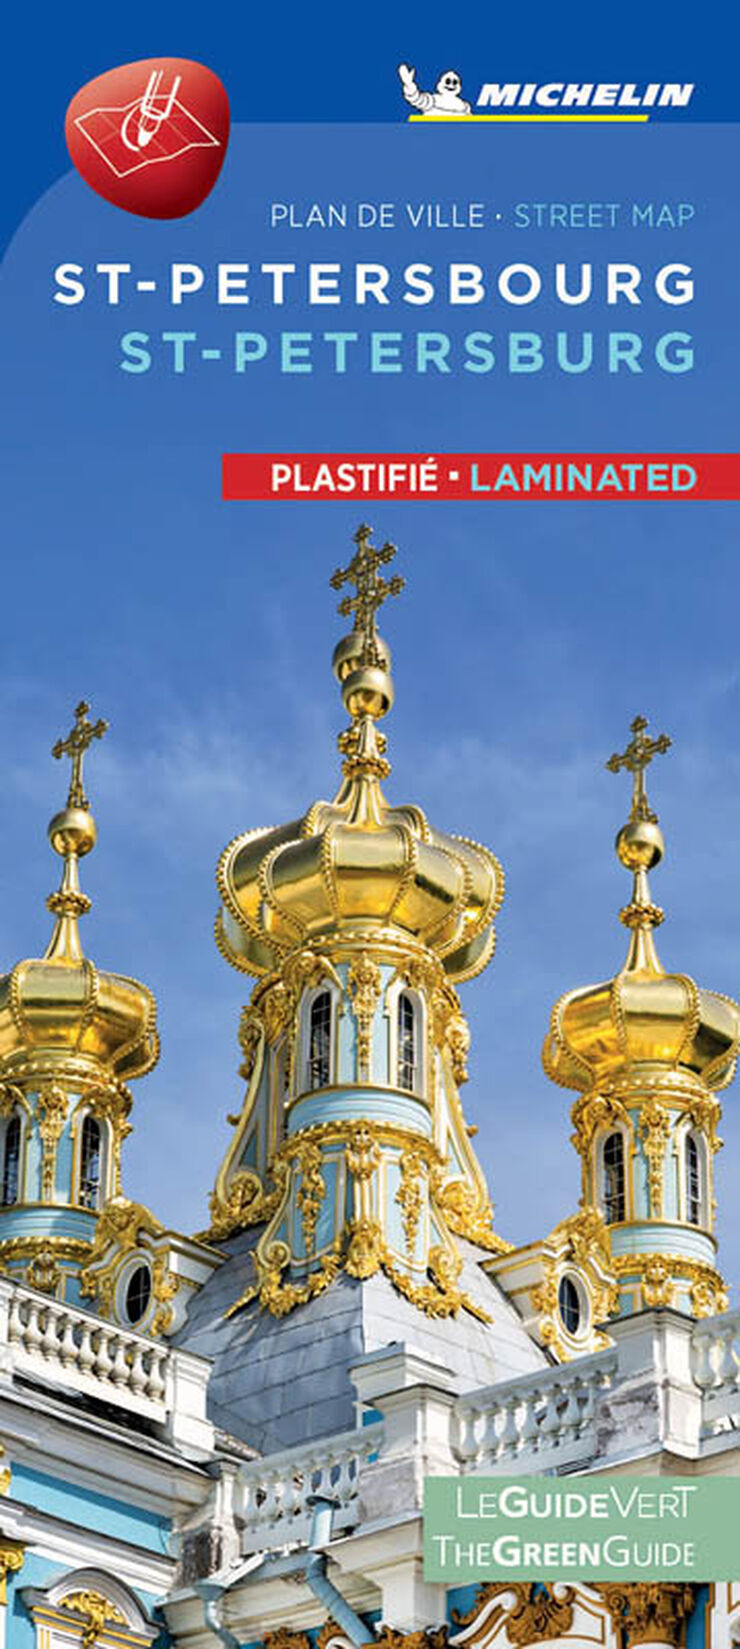 Plano St. Petersbourg plastificado